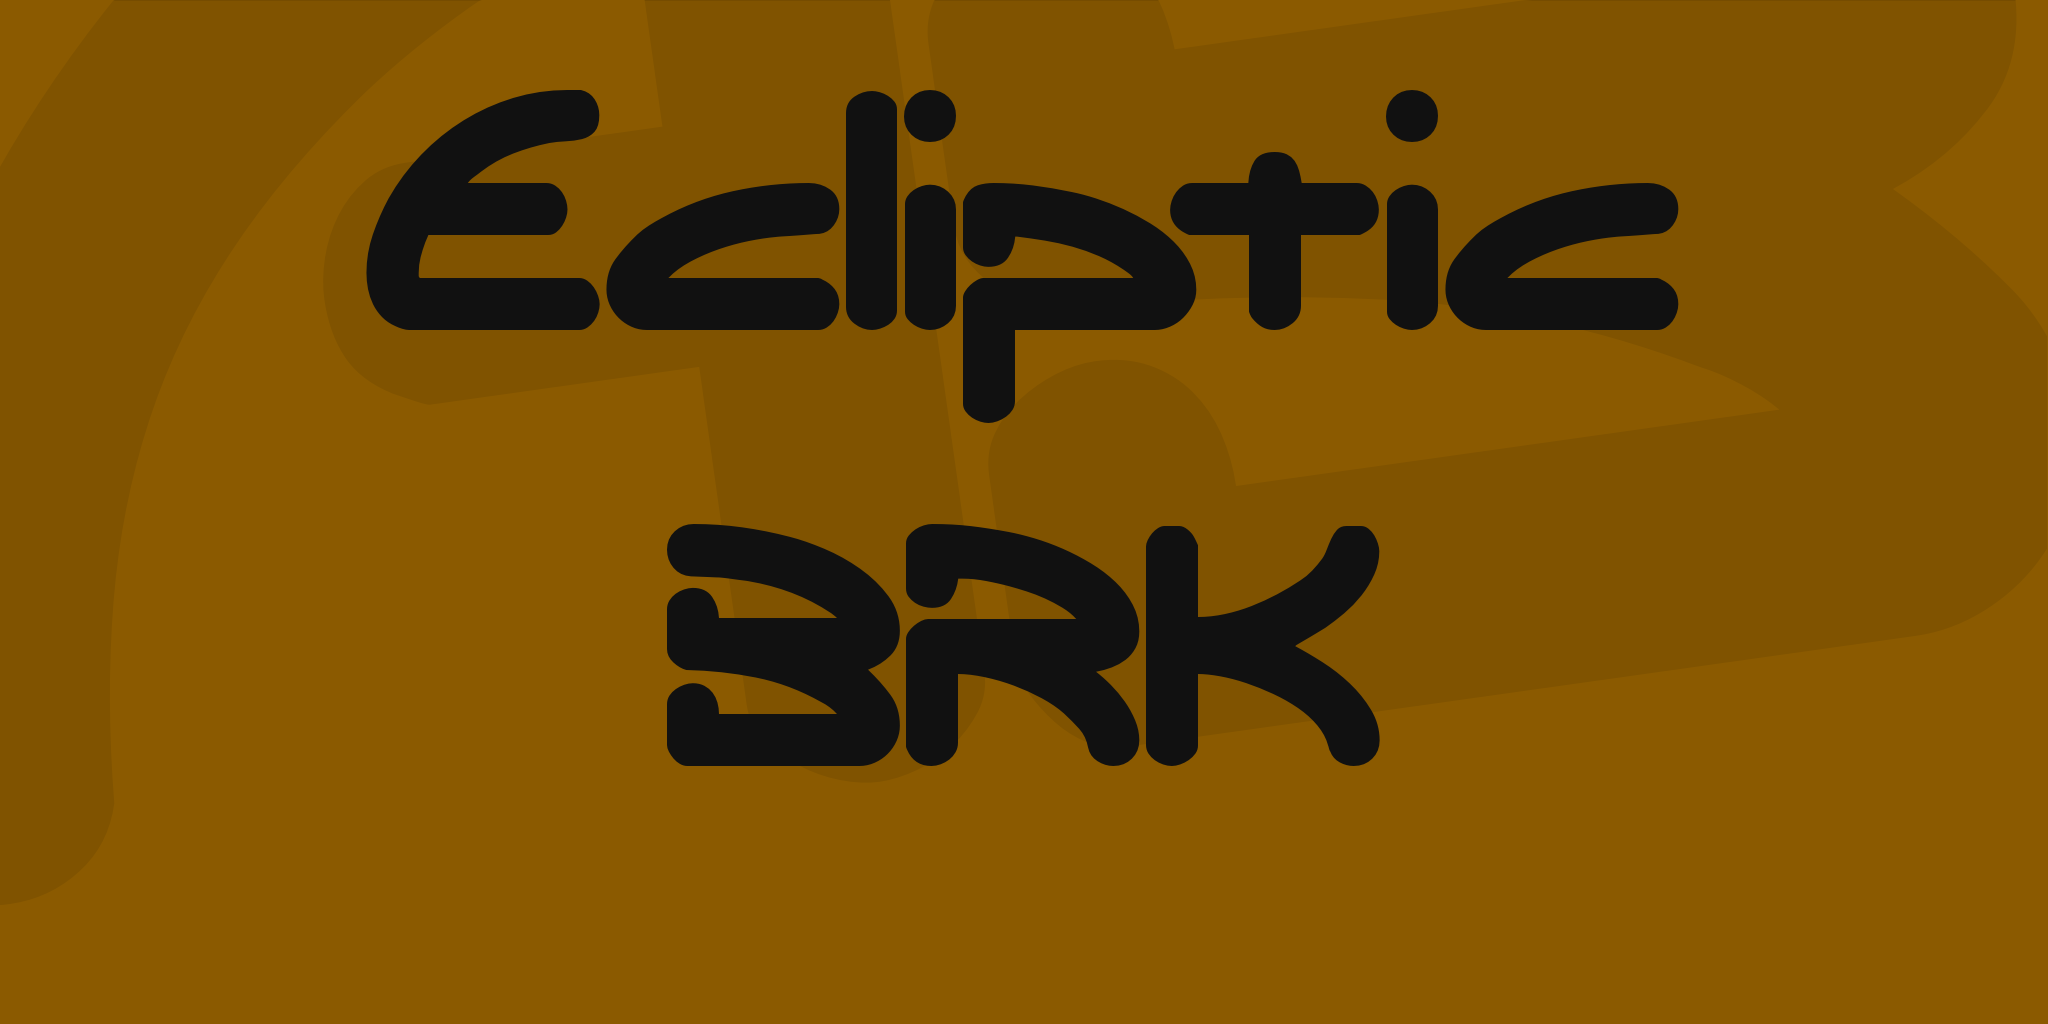 Ecliptic Brk